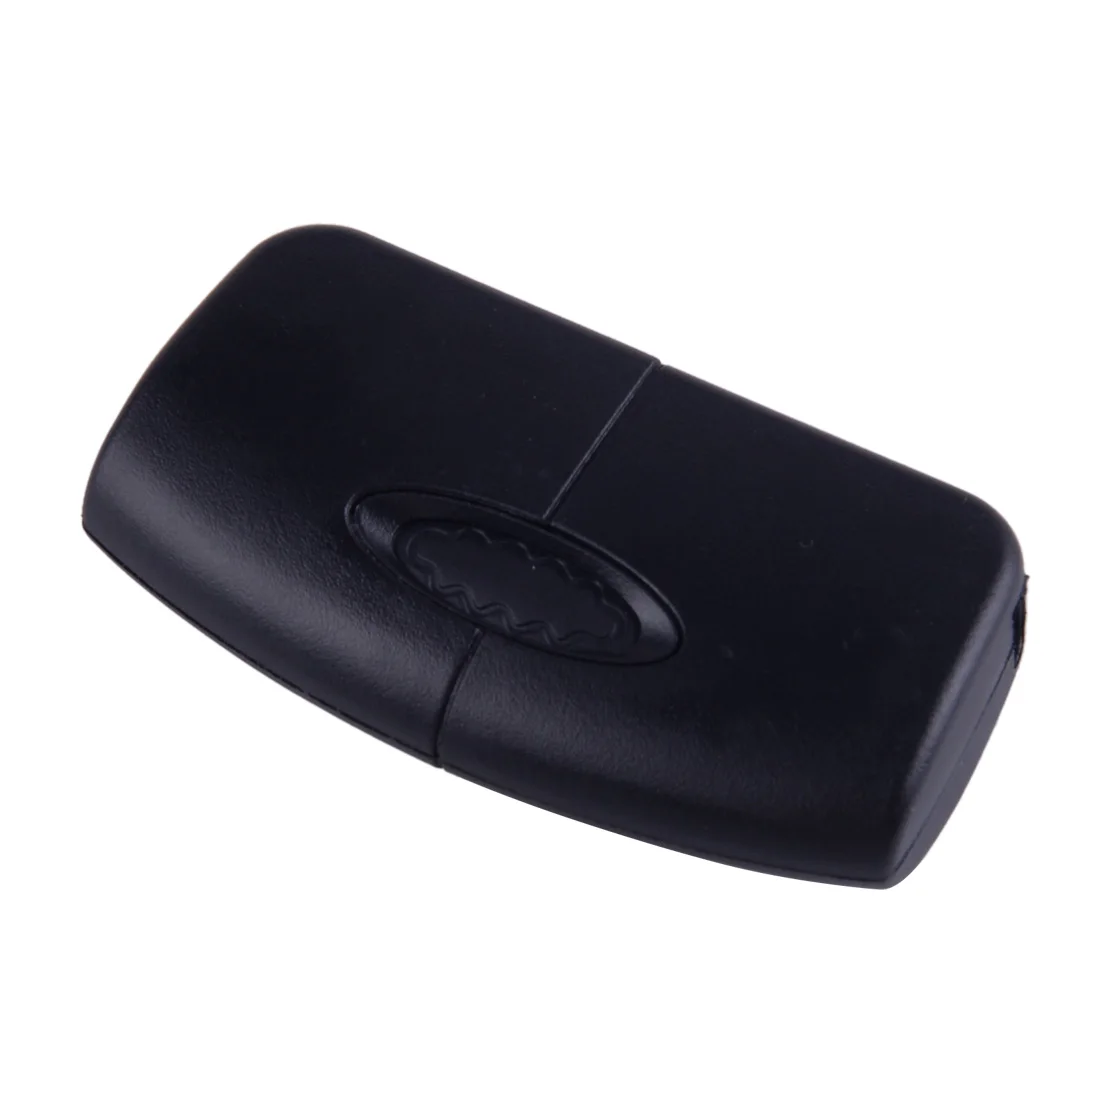 Beler 3 кнопки дистанционного ключа 433 МГц с чипом 4D63 подходит для Ford Focus Fiesta Mondeo Fiesta Galaxy C Max S Max 2009 2010